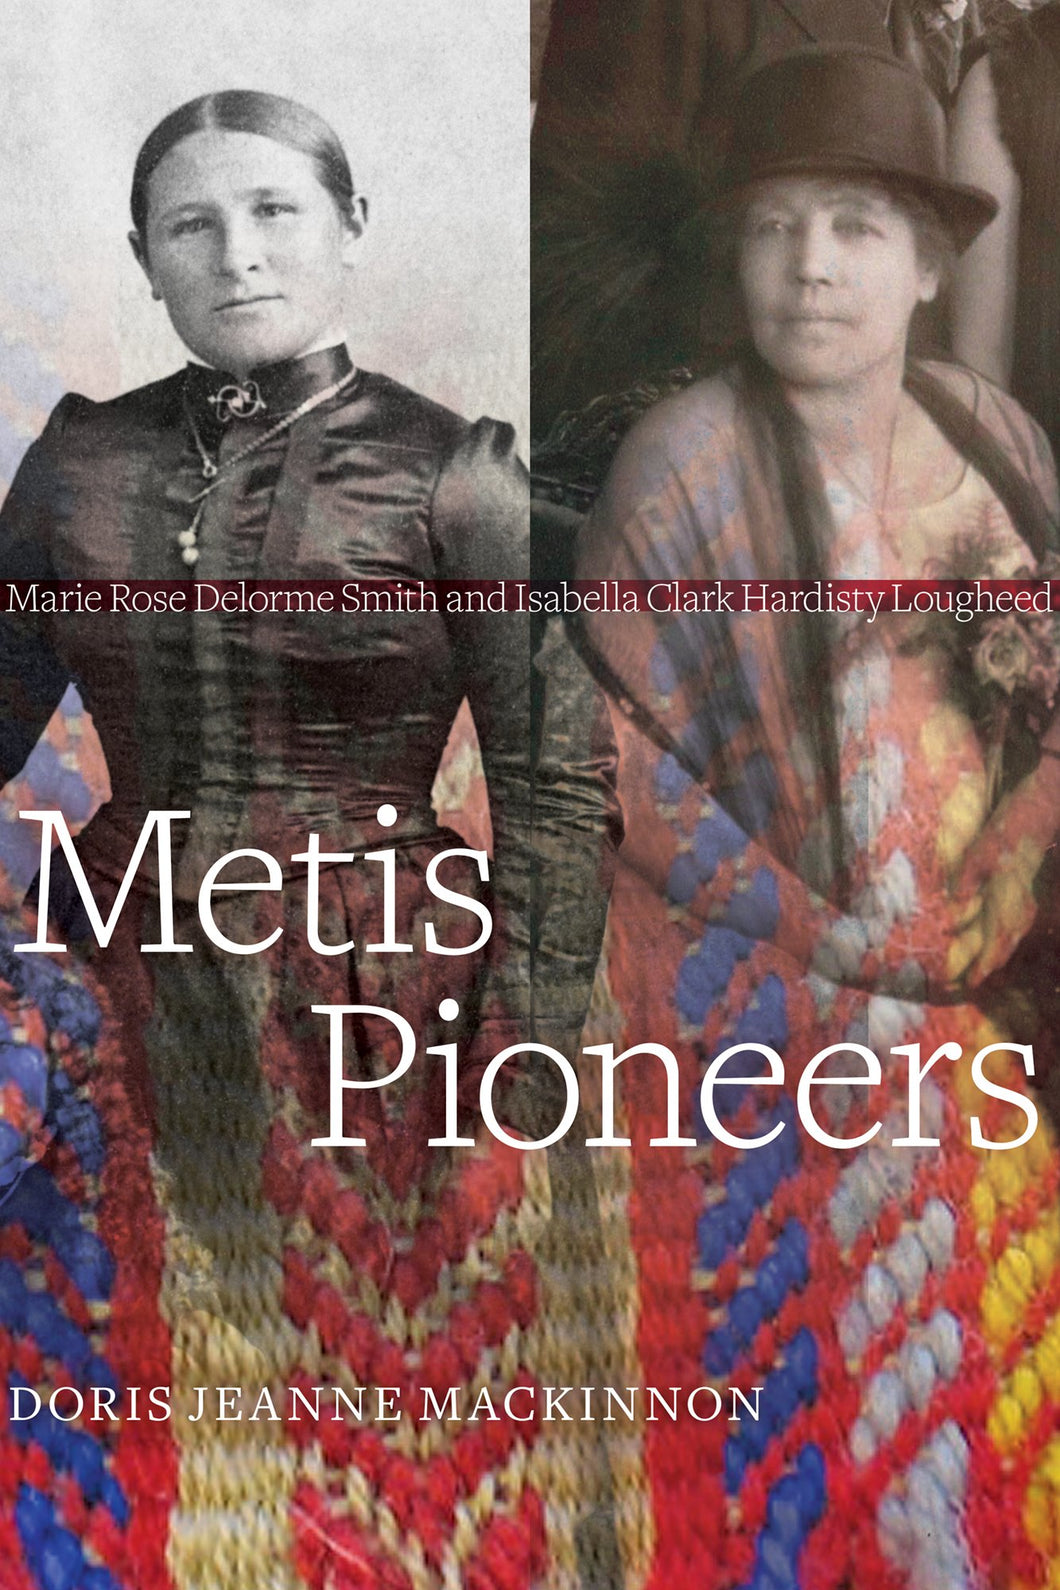 Metis Pioneers: Marie Rose Delorme Smith and Isabella Clark Hardisty Lougheed [Doris Jeanne MacKinnon]